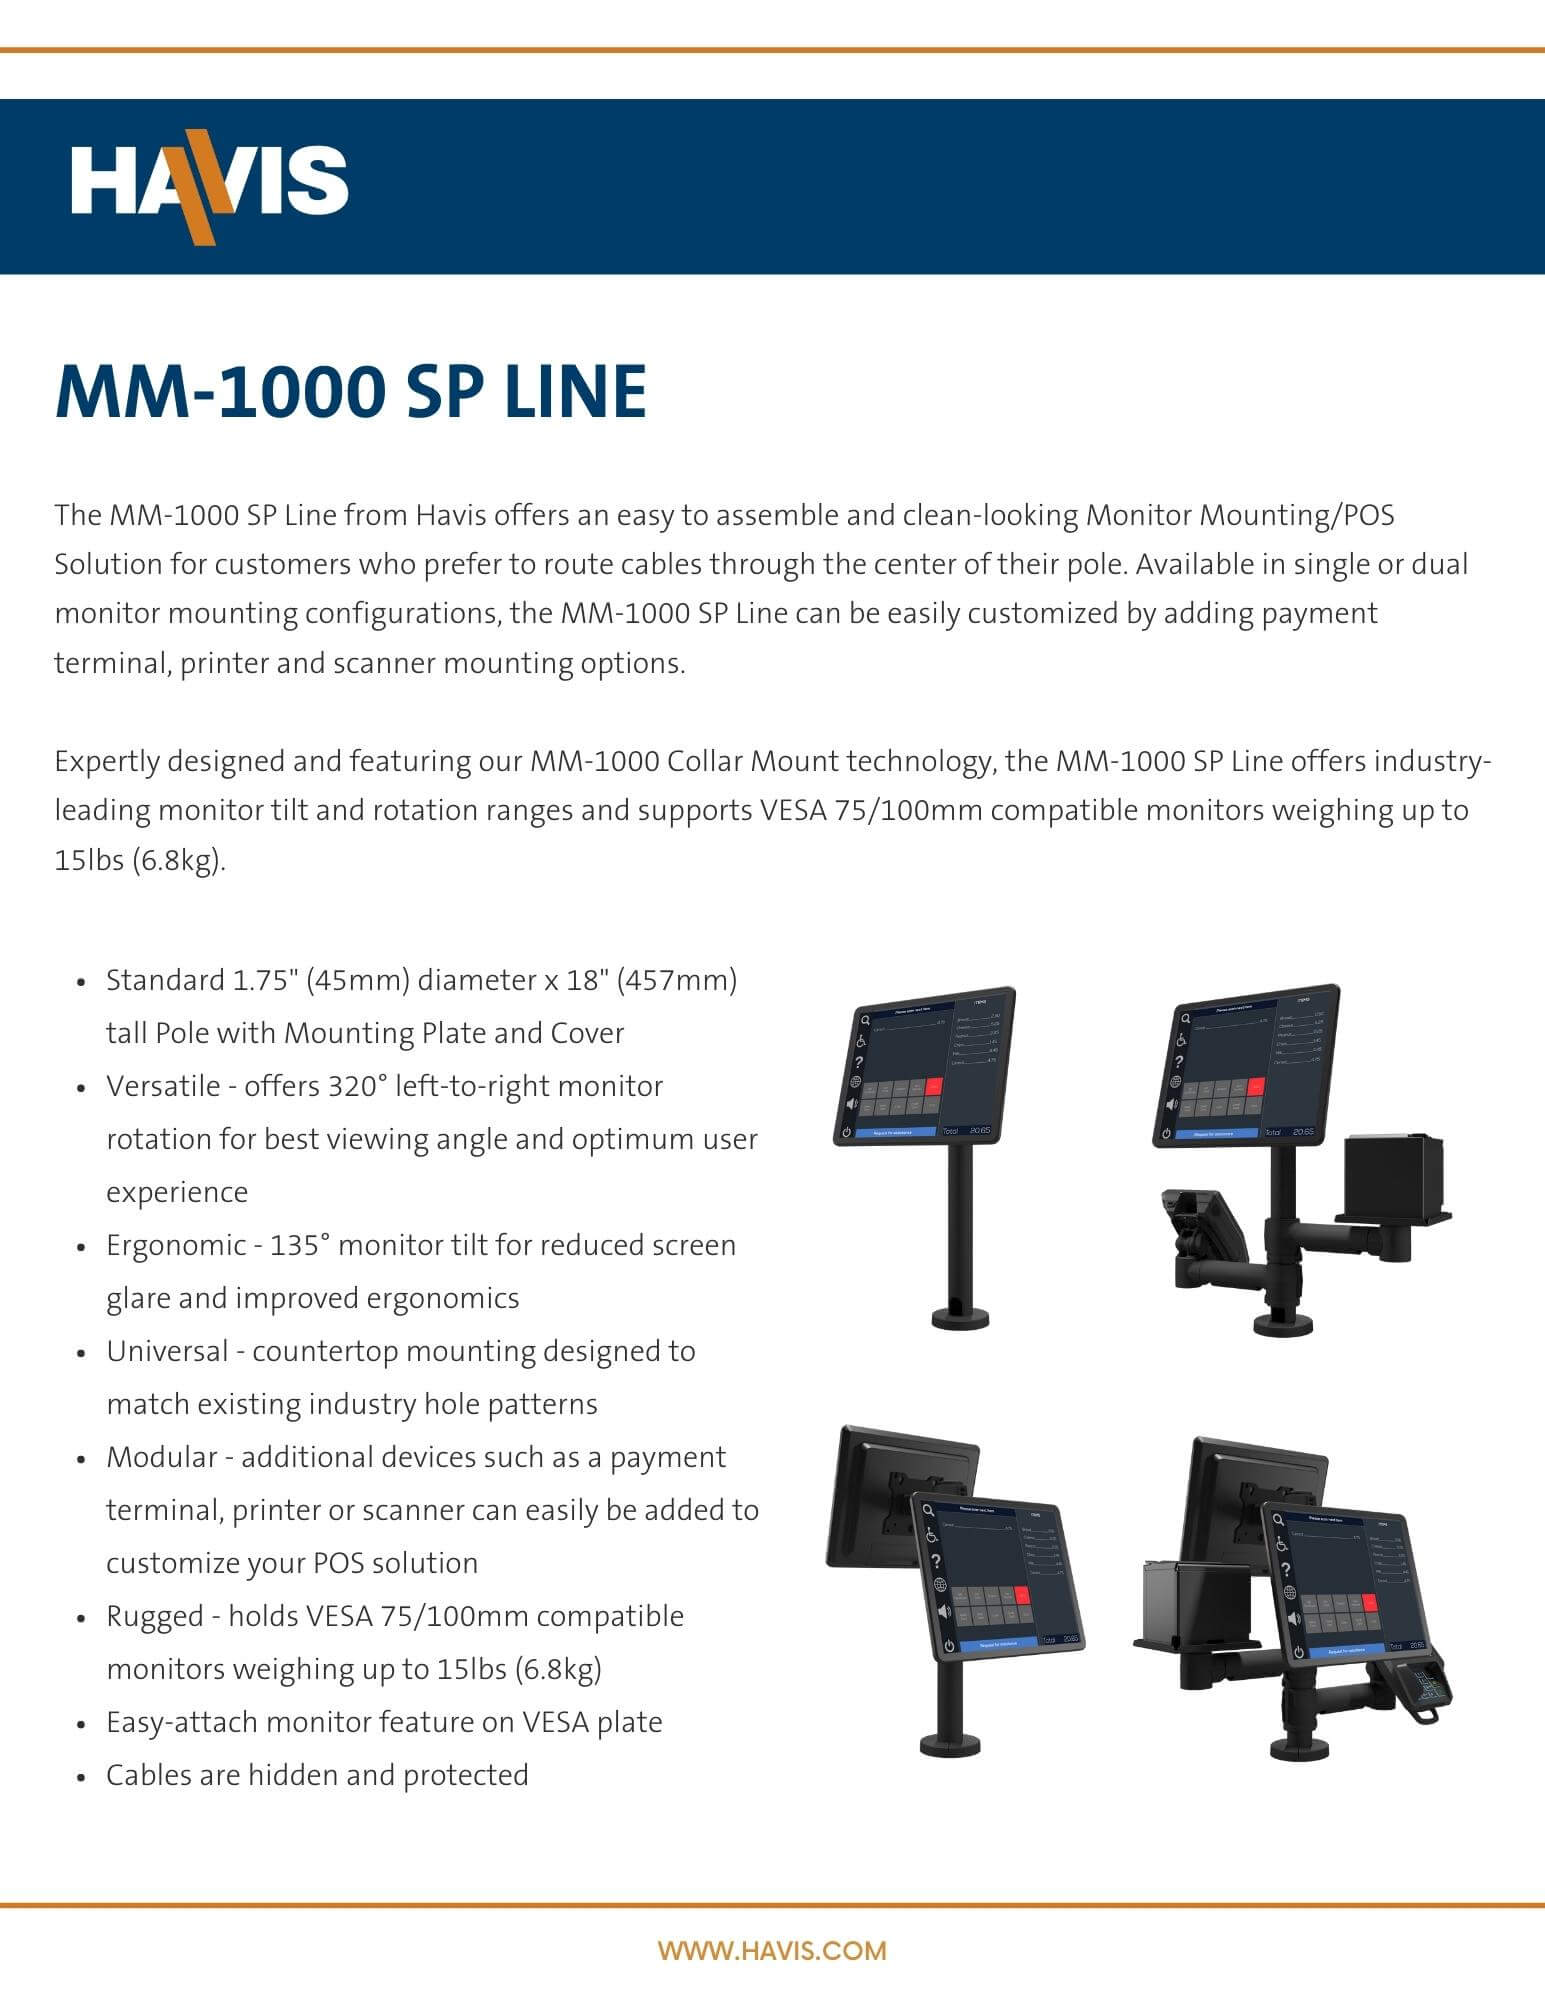 MM-1000 SP Line Datasheet